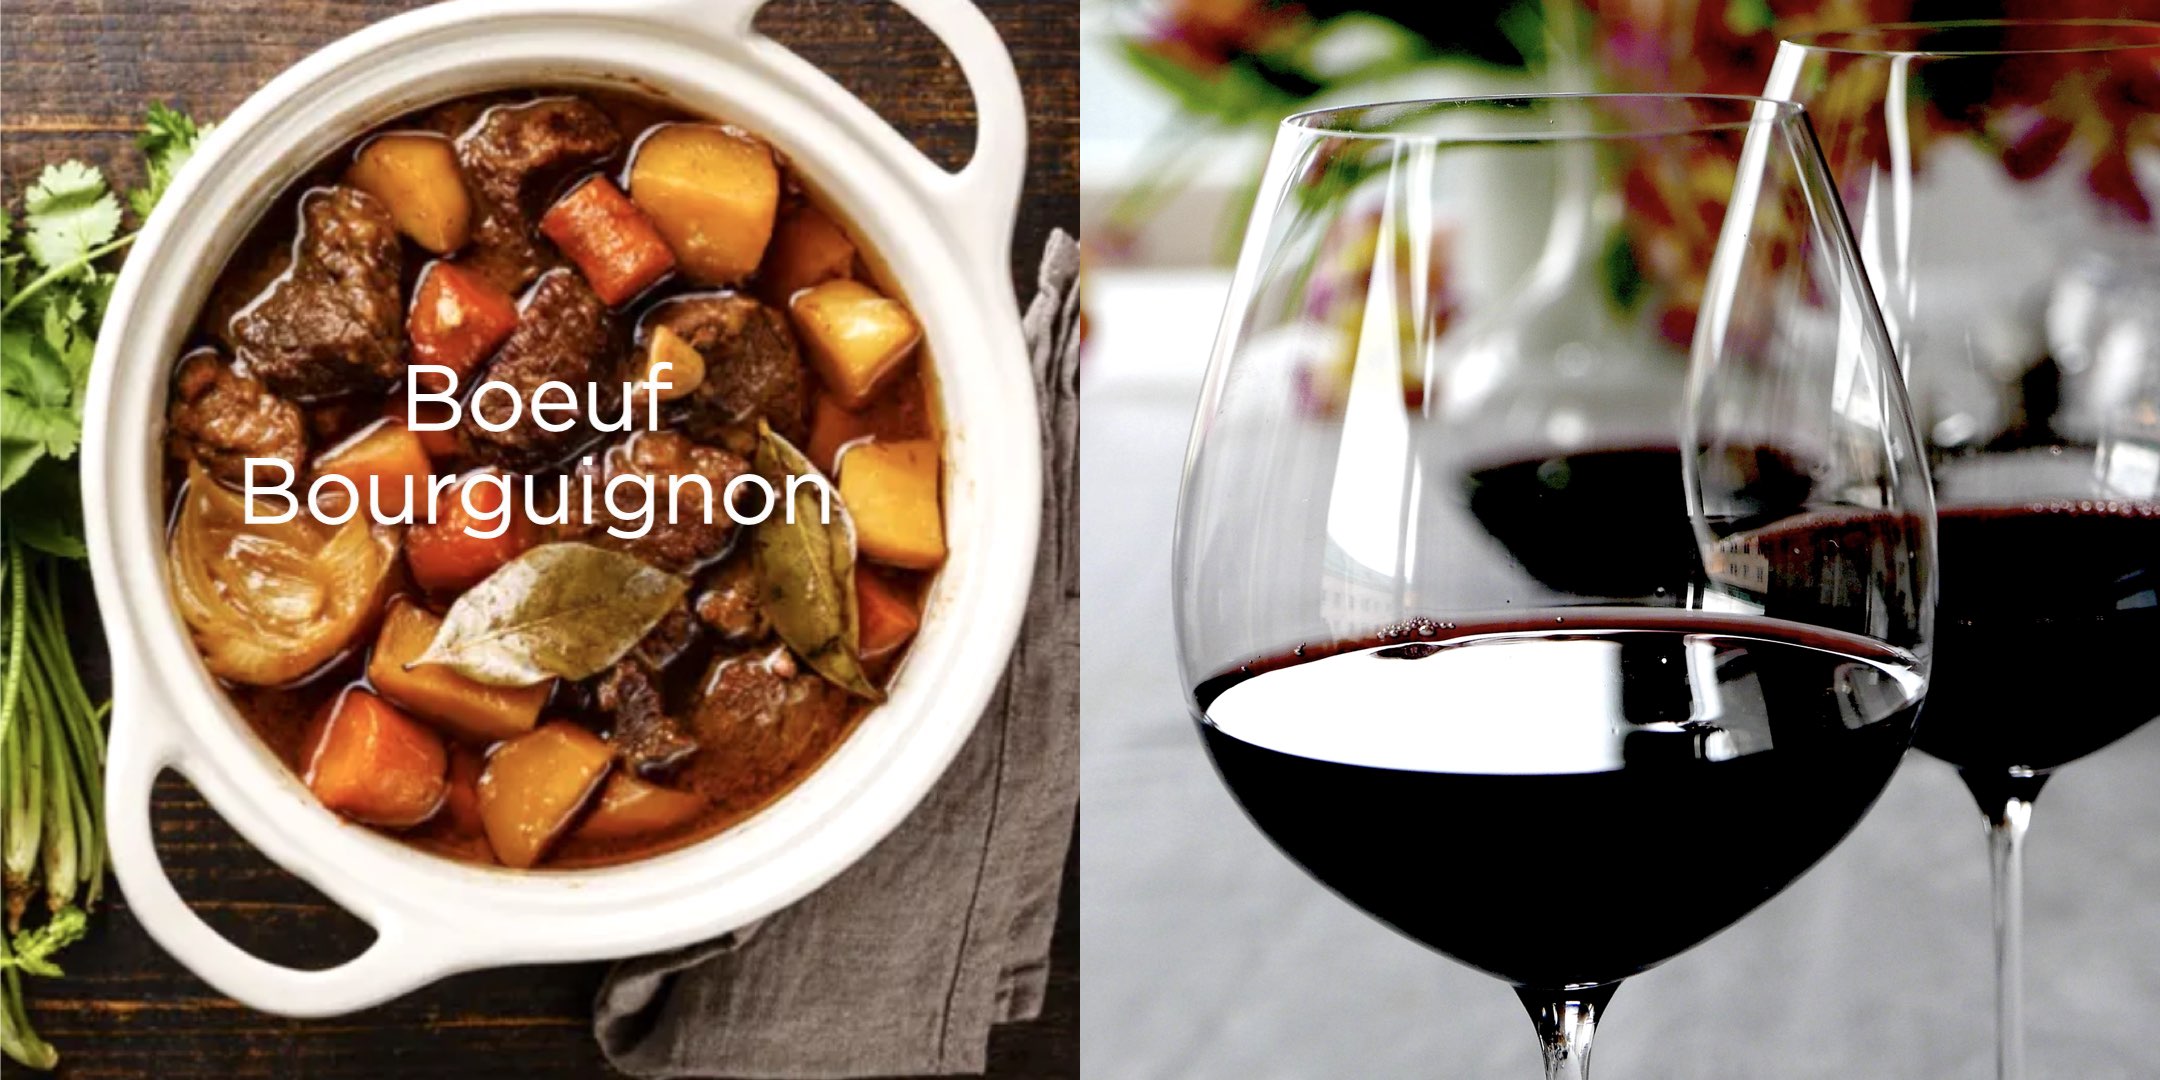 Boeuf Bourguignon och vin